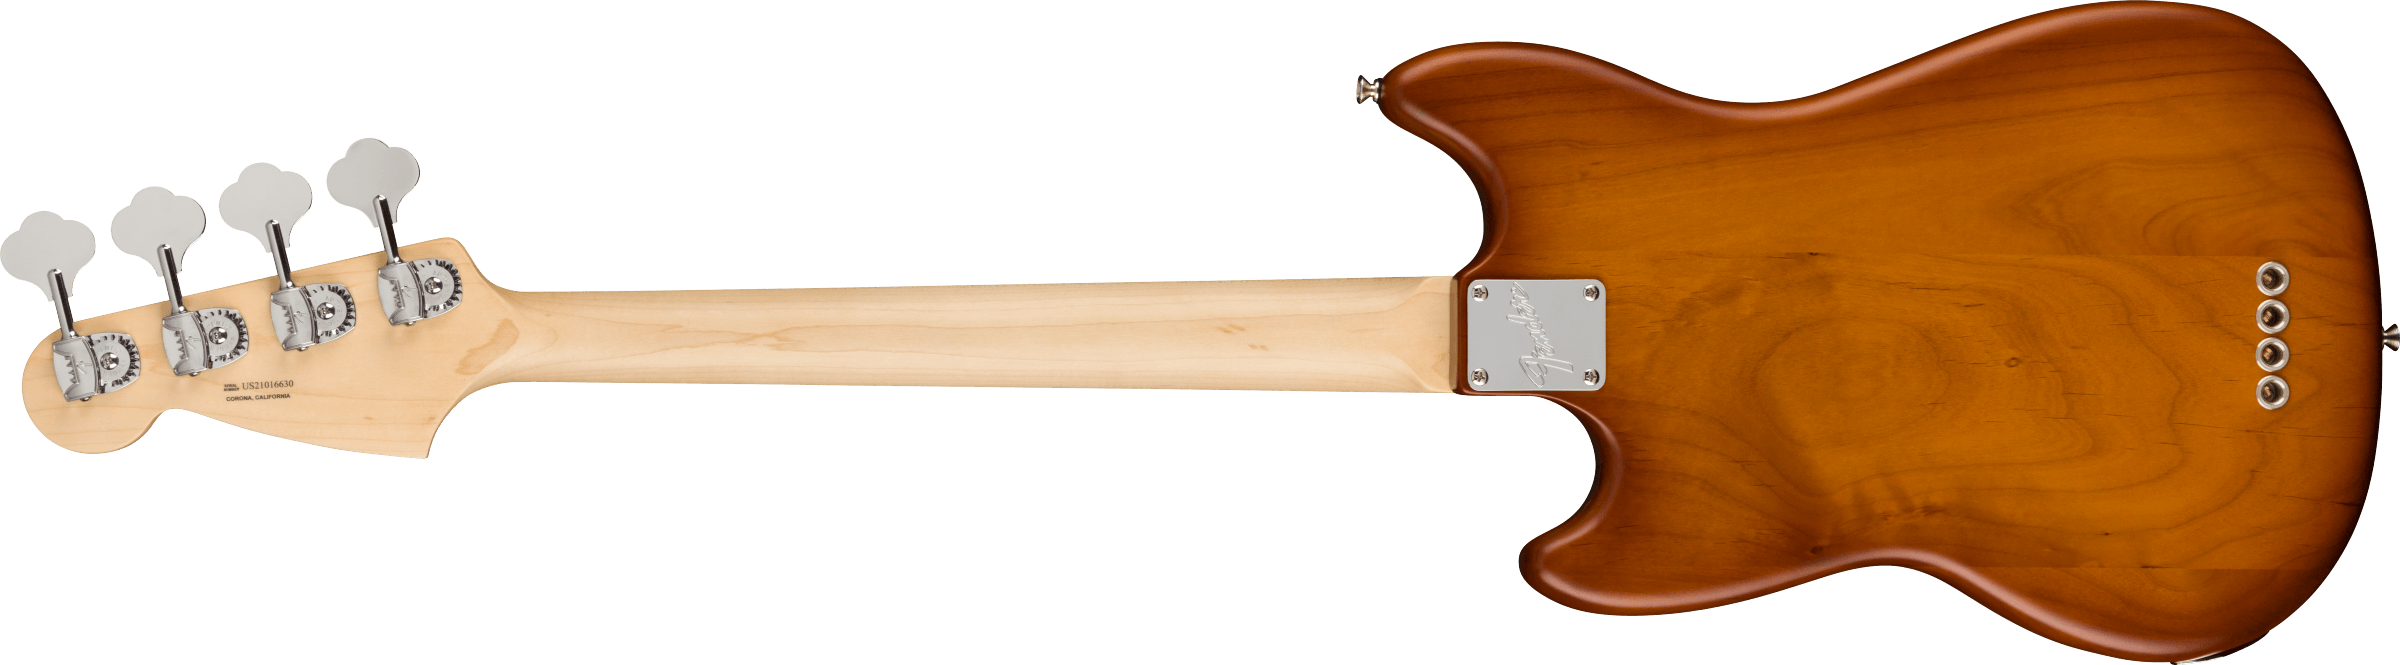 Fender Mustang Bass American Performer Ltd Usa Rw - Honey Burst Satin - Basse Électrique Solid Body - Variation 1